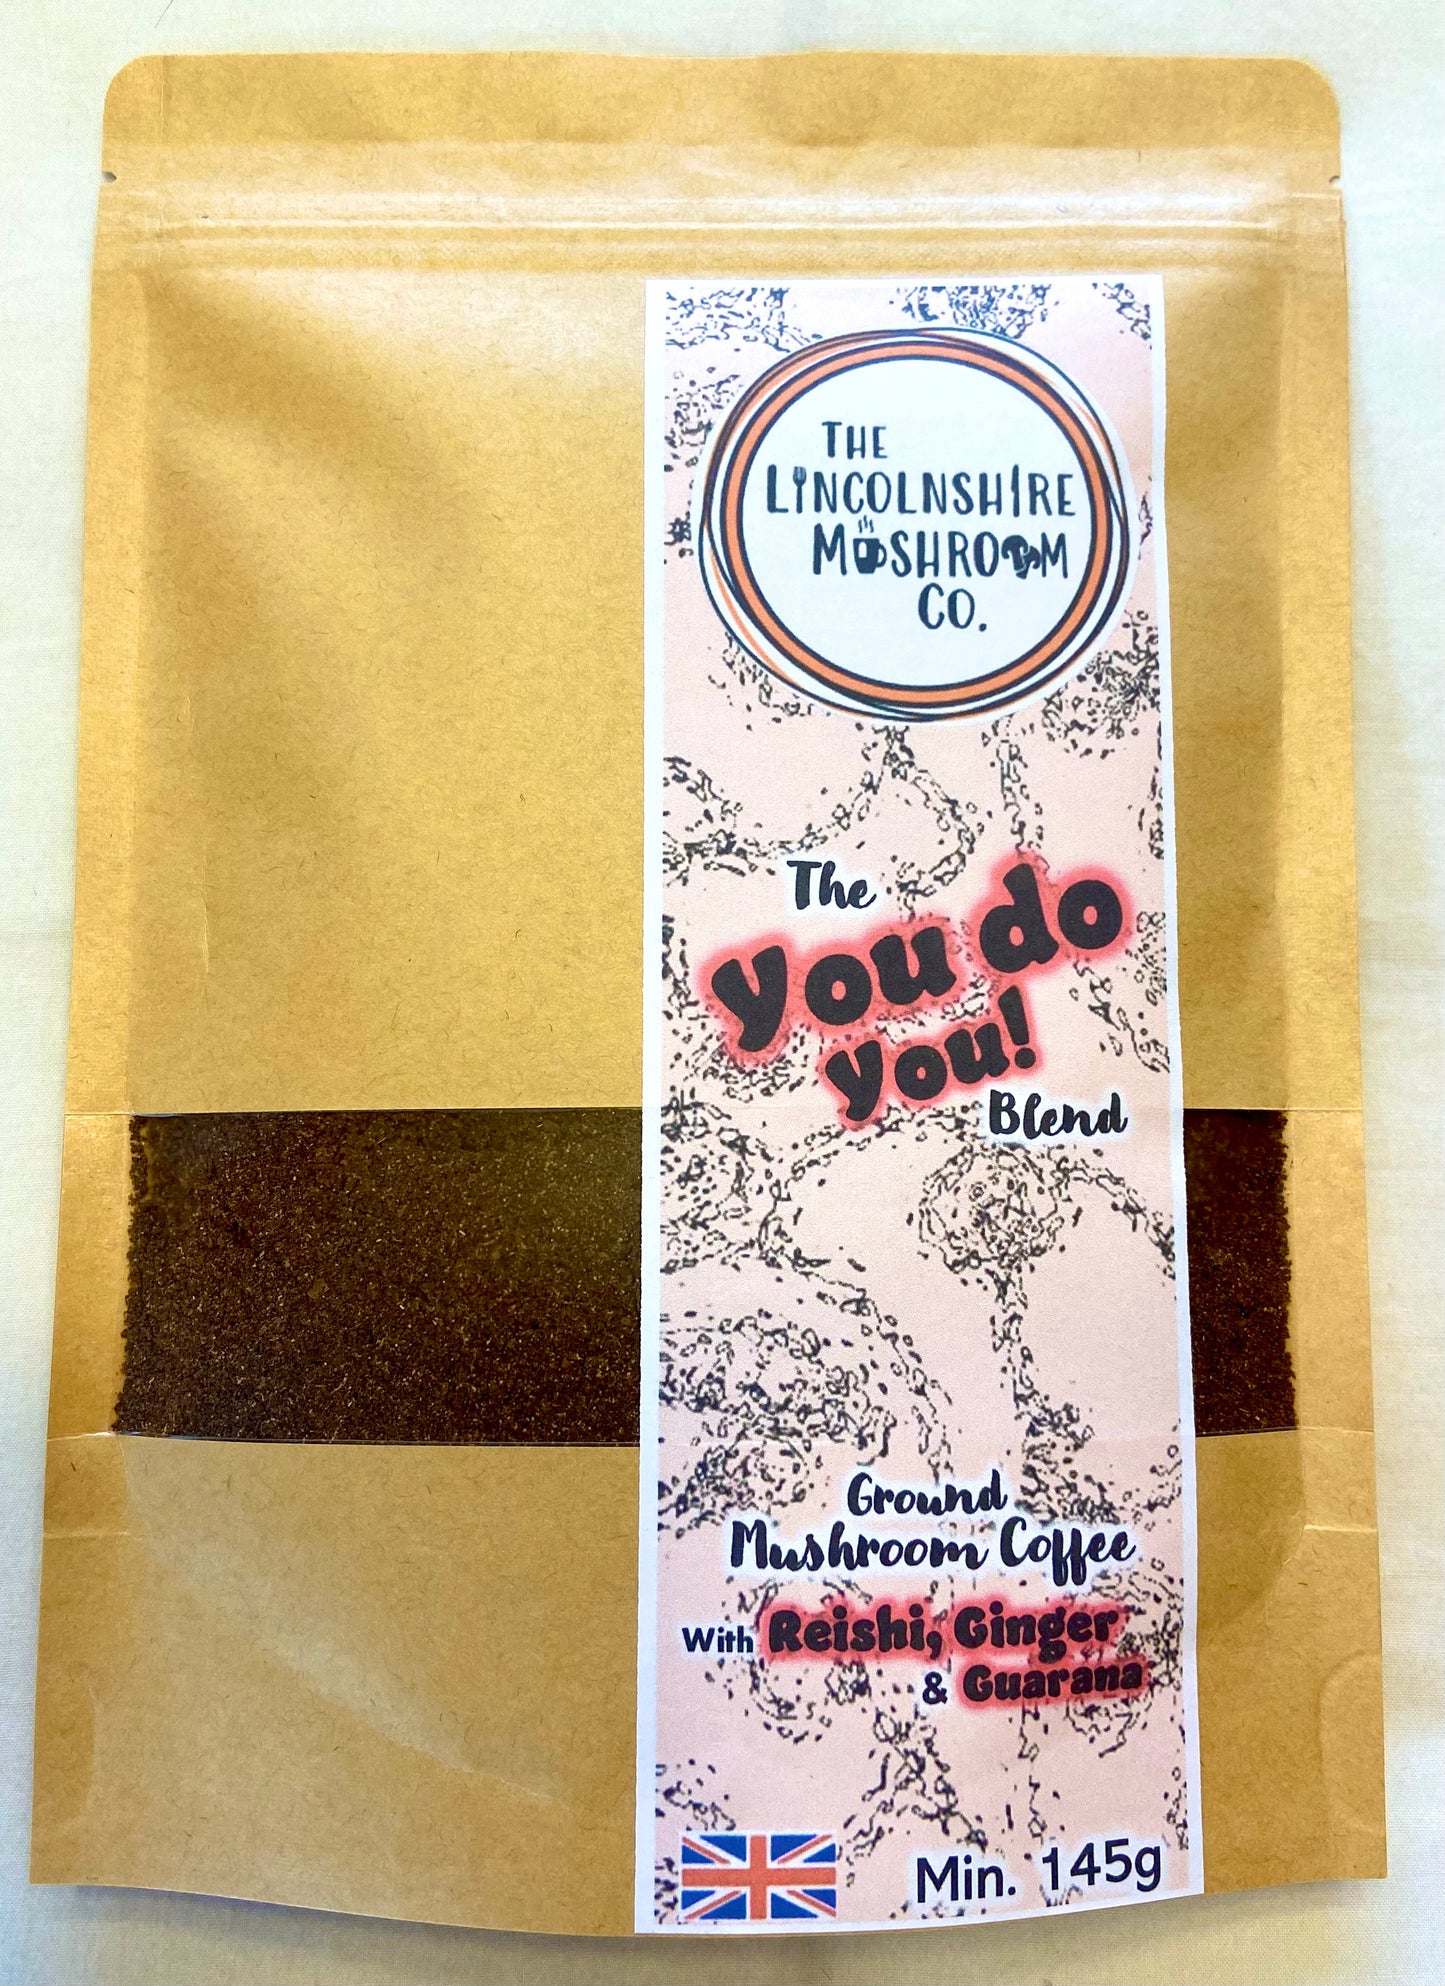 The “You Do You” Blend. Reishi, Ginger & Guarana Ground Mushroom Coffee